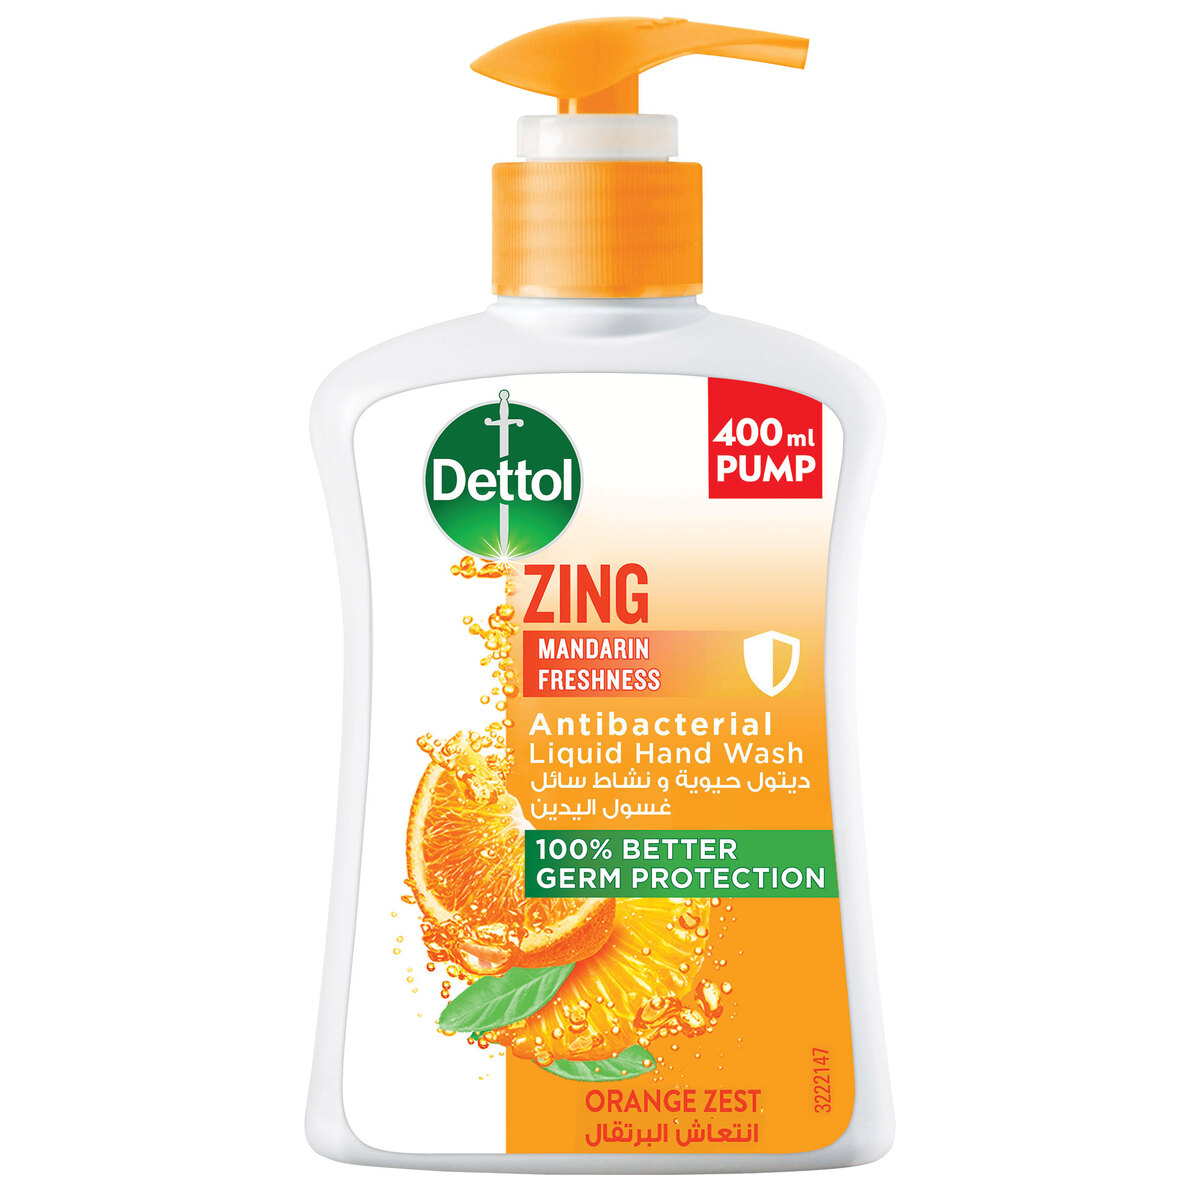 Dettol Zing Mandarin Freshness Liquid Hand Wash Orange Zest Fragrance 400 ml